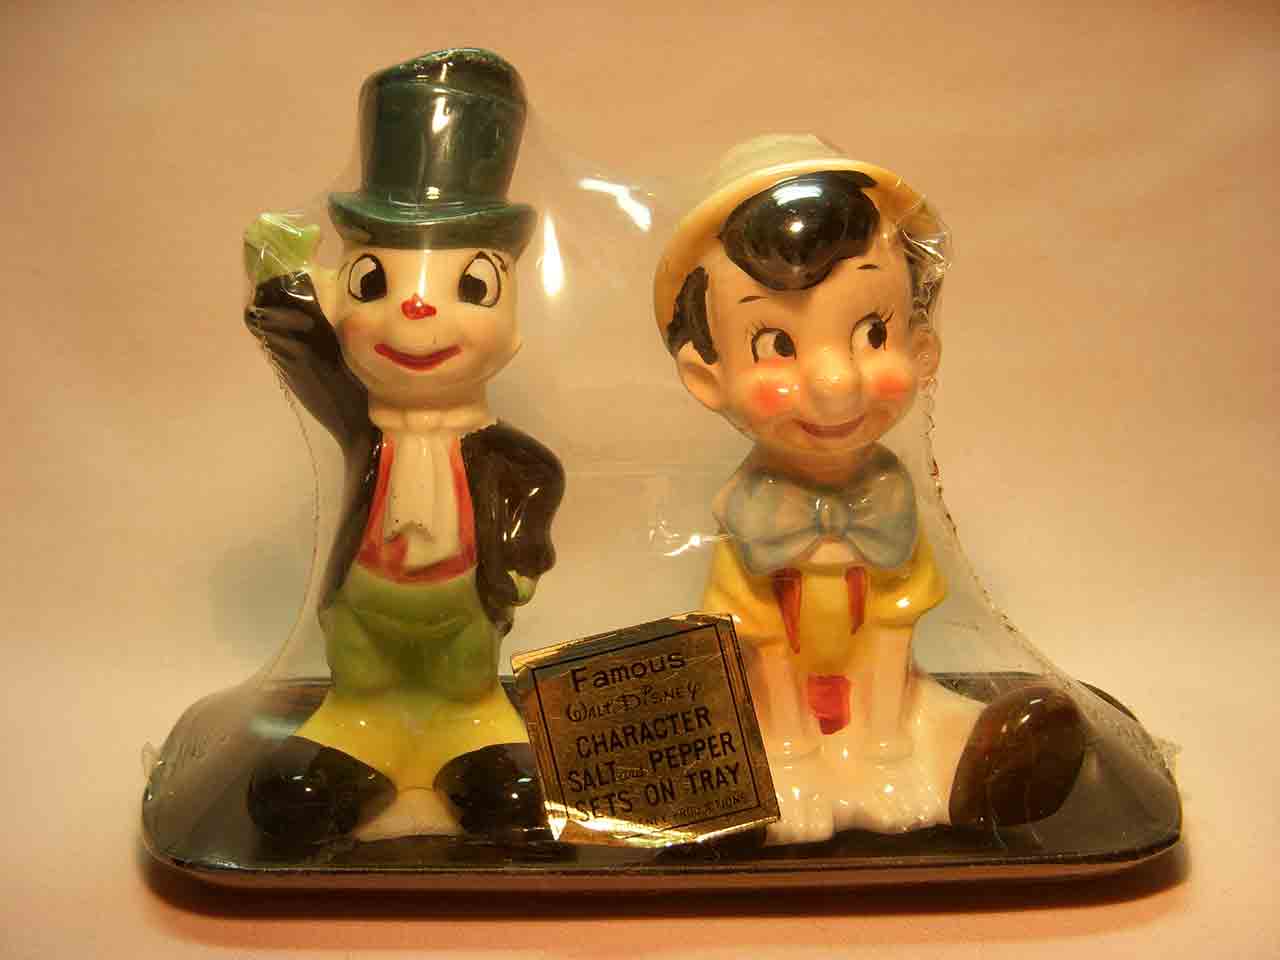 Vintage Enesco series of Walt Disney characters on trays - Pinocchio and Jiminy Cricket